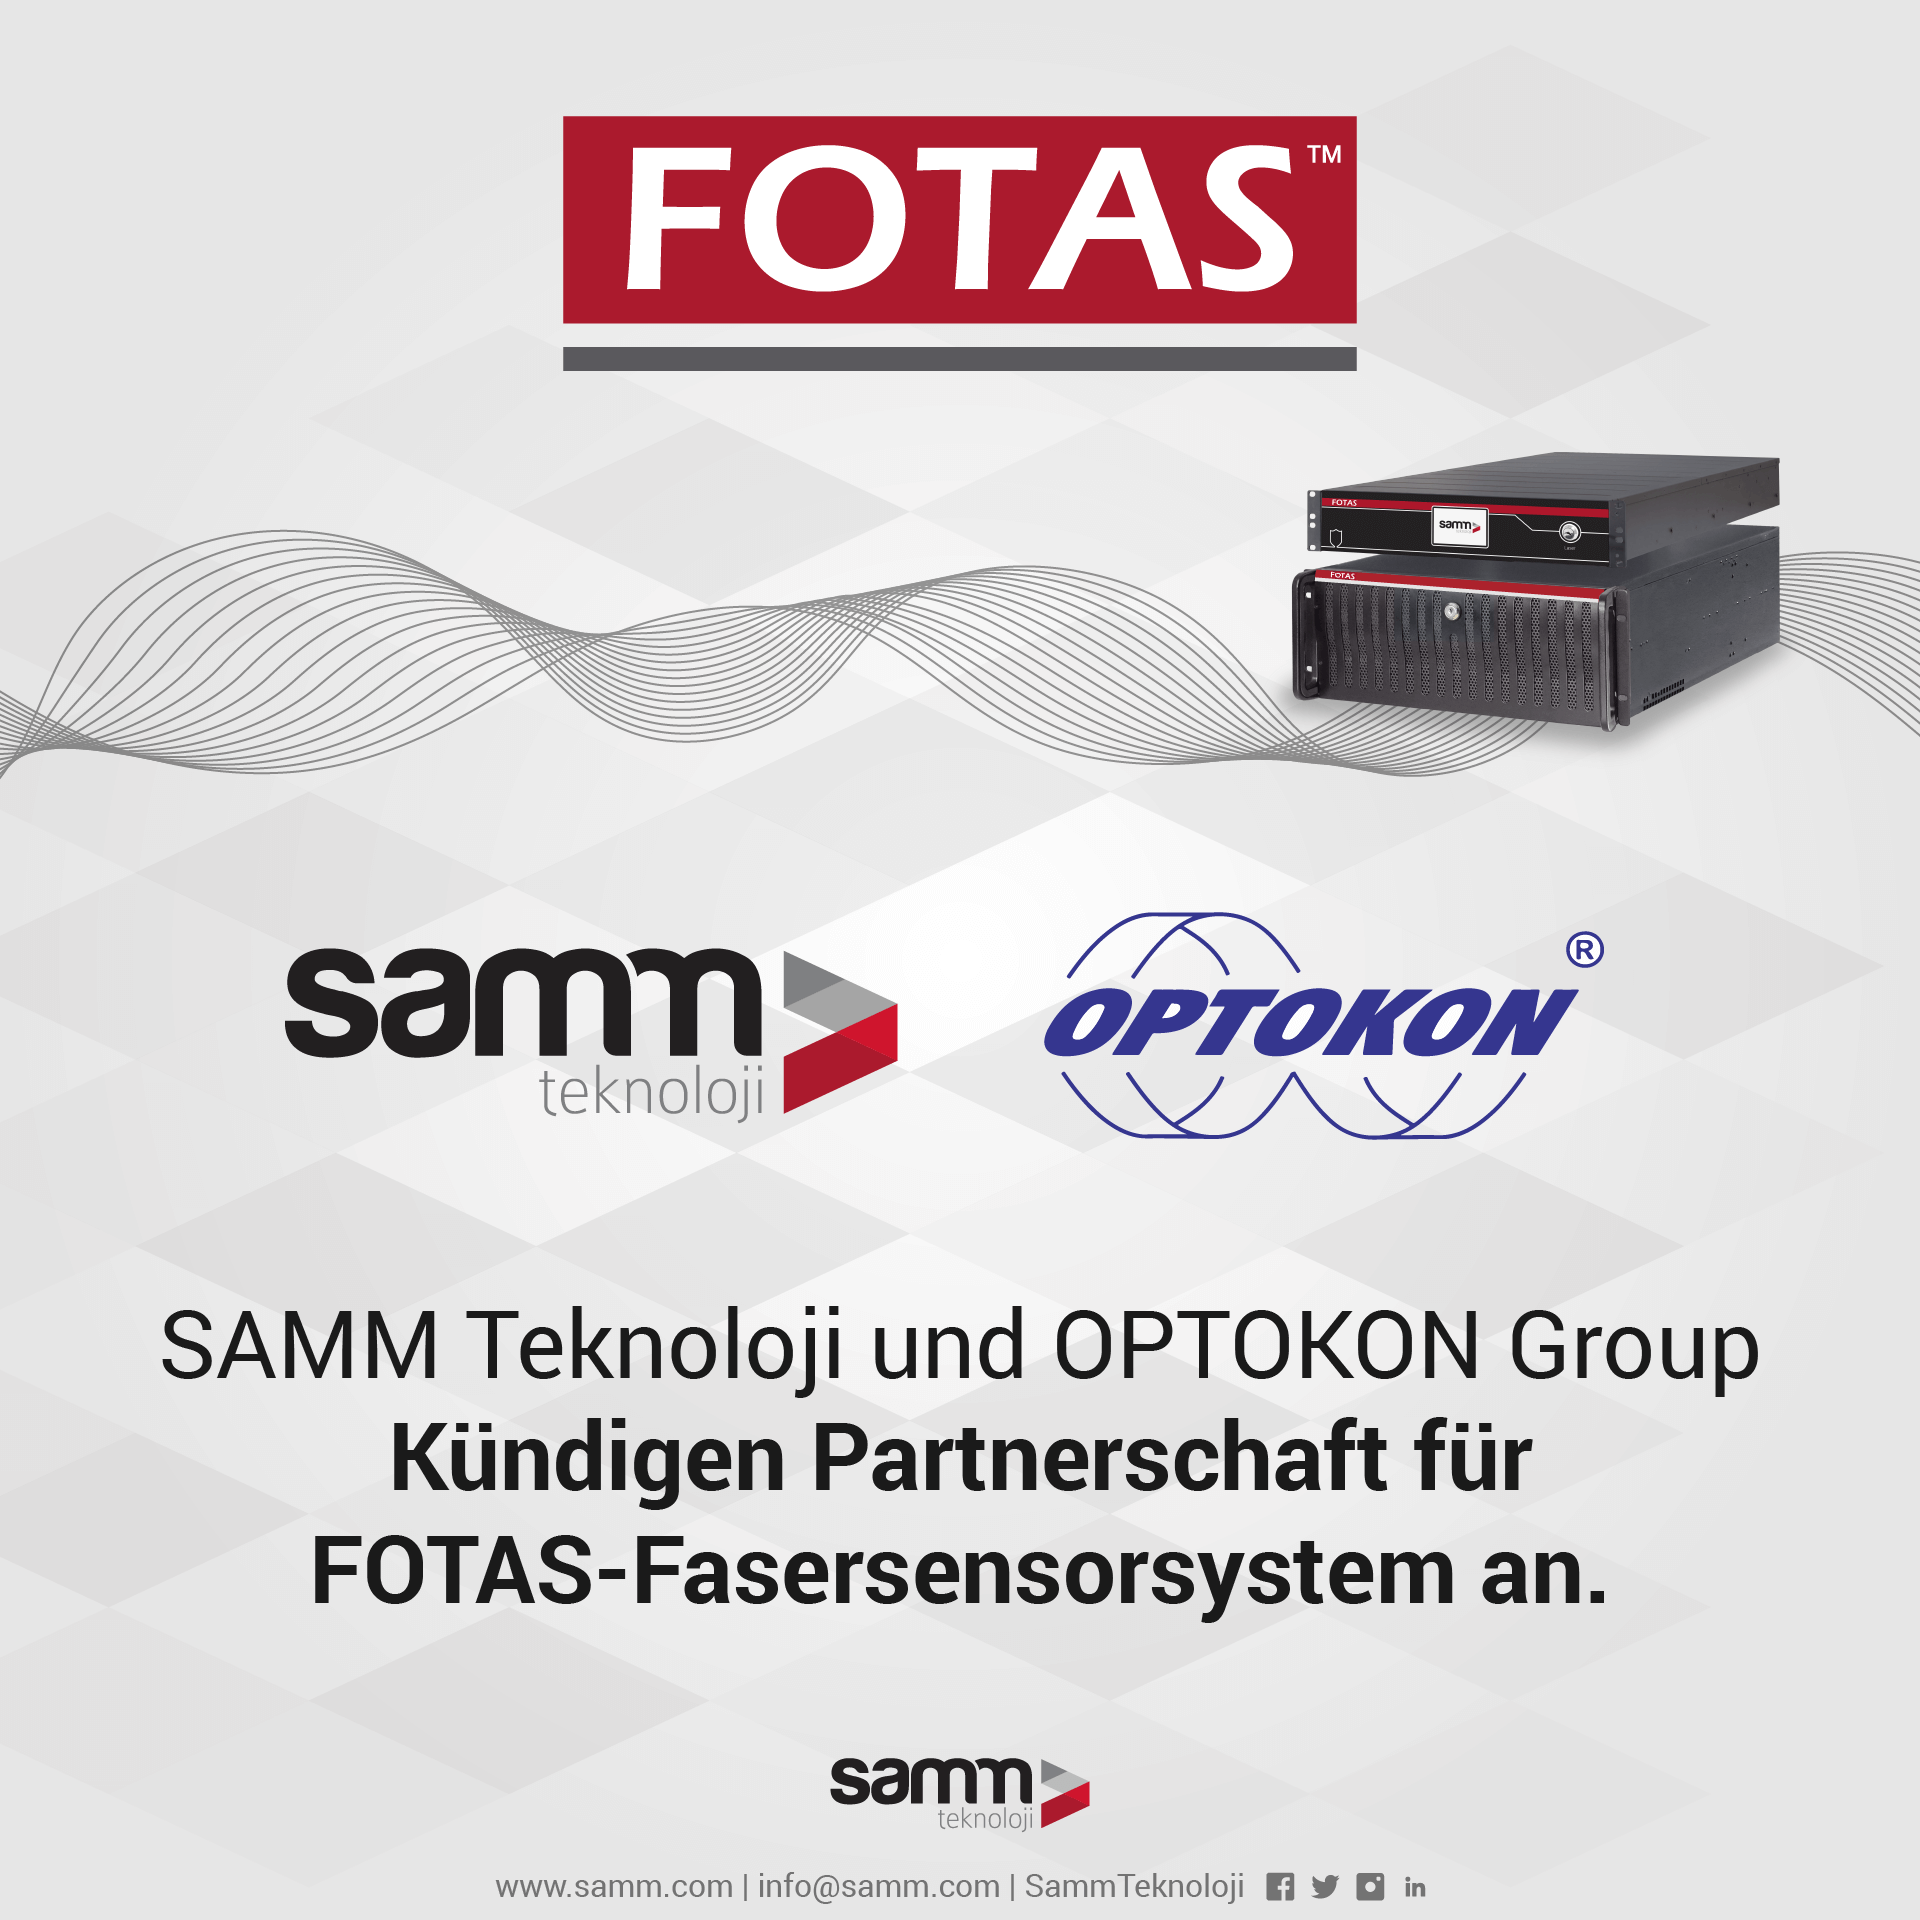 SAMM Teknoloji und OPTOKON Group Kündigen Partnerschaft für FOTAS-Fasersensorsystem an.